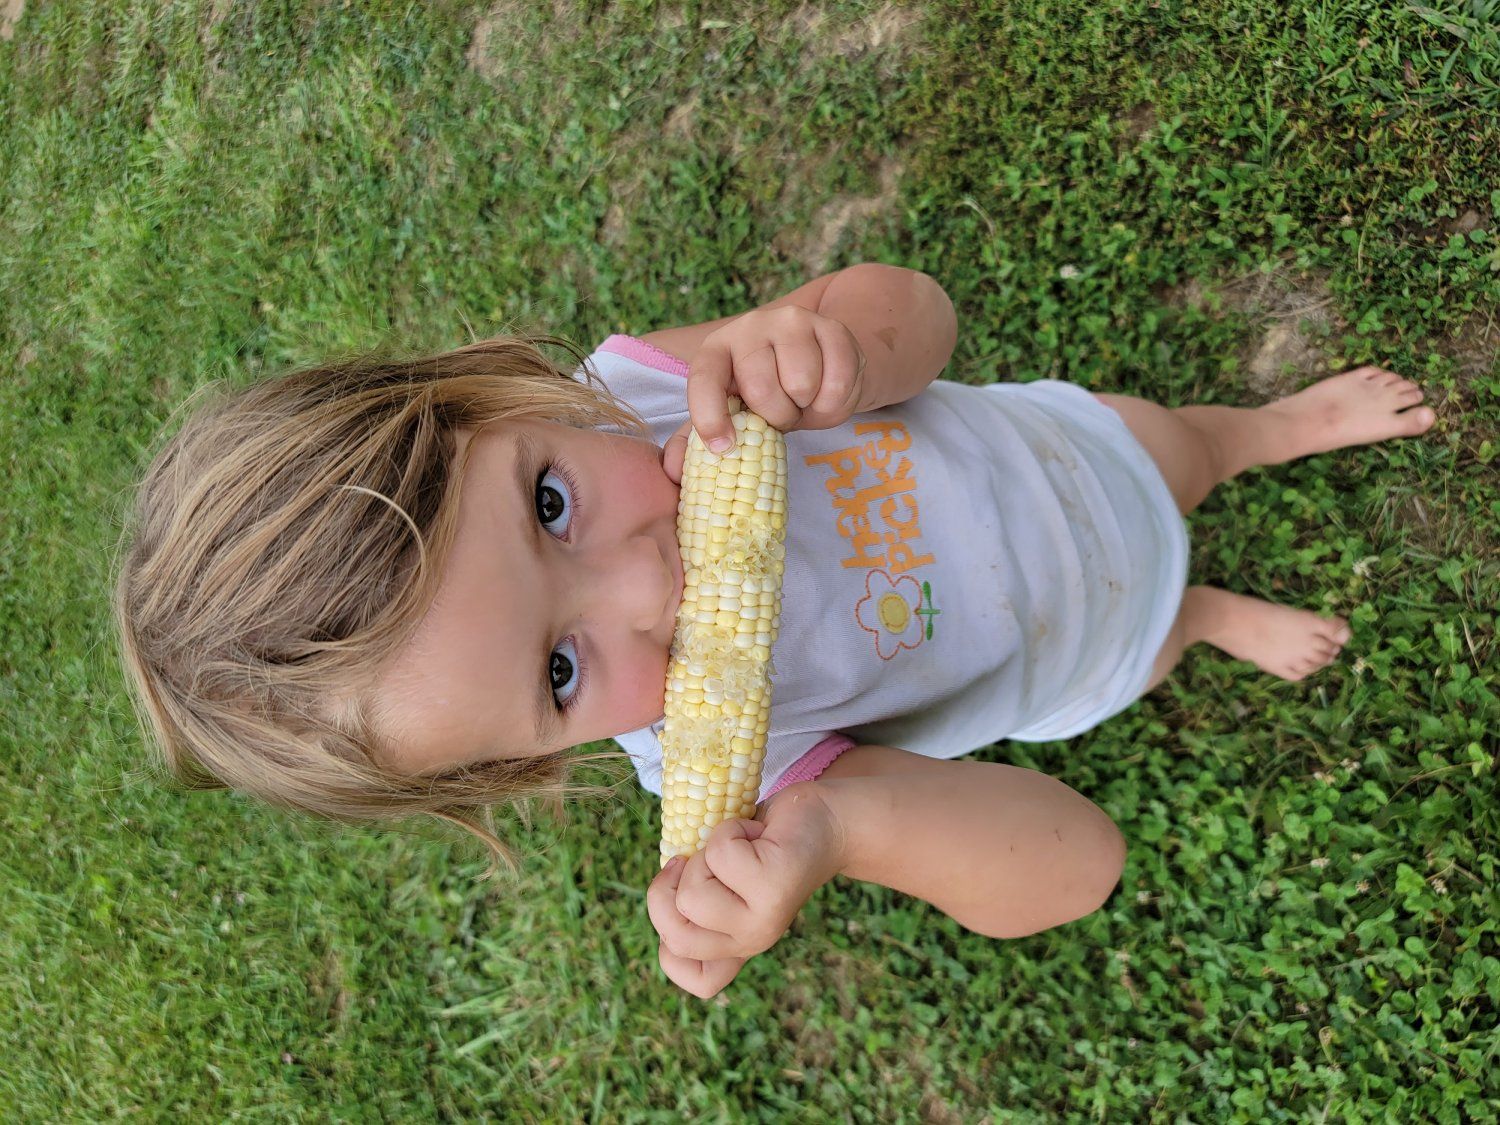 Previous Happening: Sweet Corn Season has begun